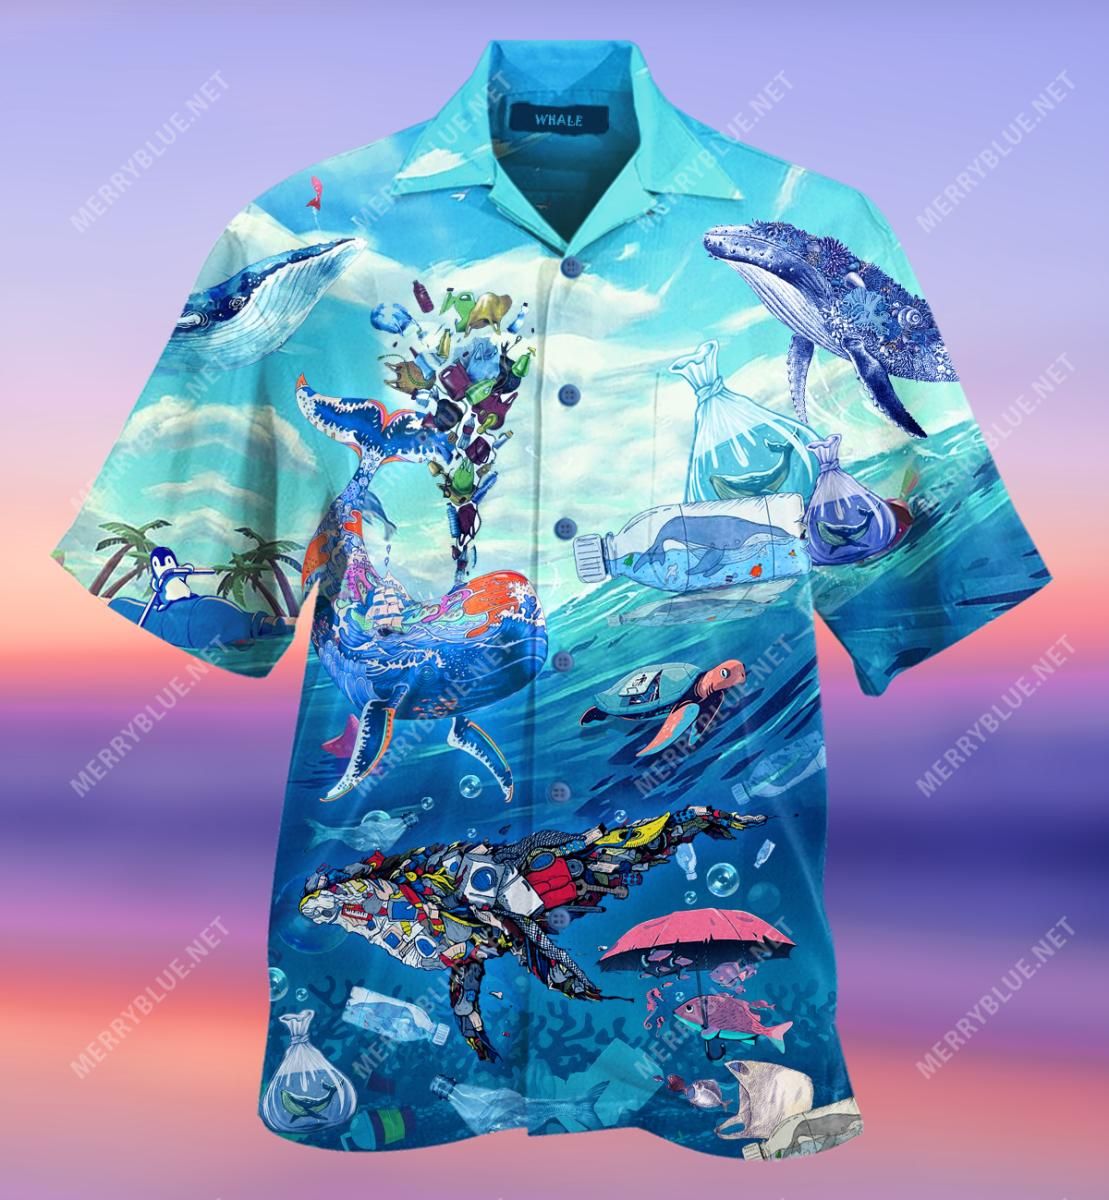 save the ocean aloha hawaiian shirt colorful short sleeve summer beach casual shirt for men and women gzfzh